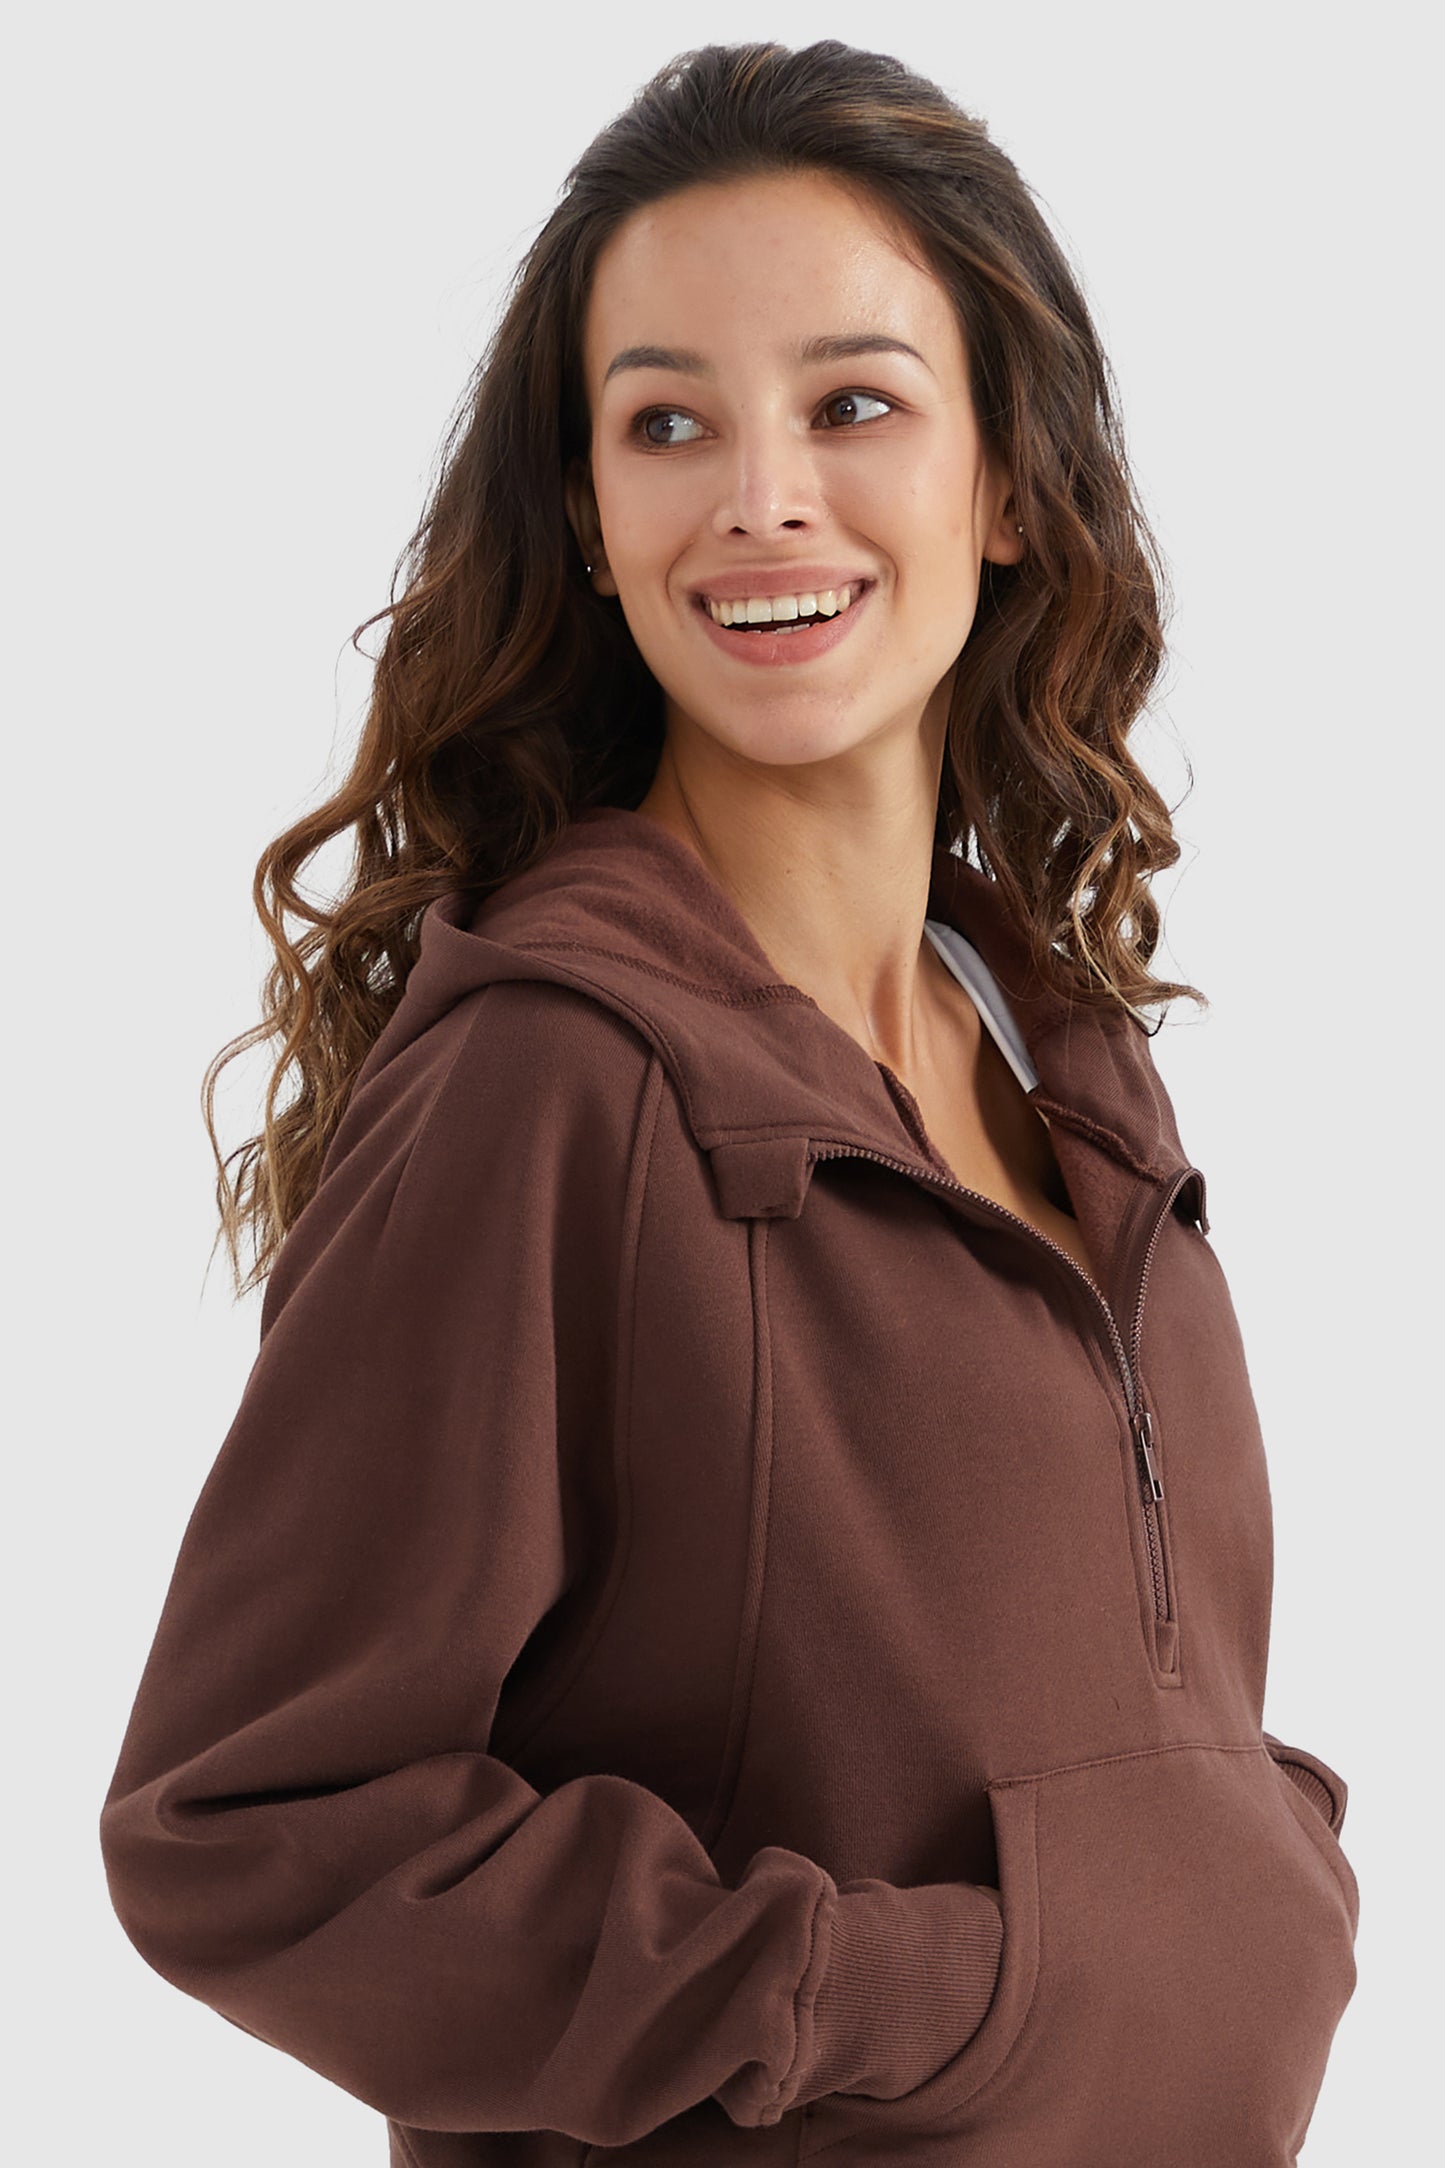 Half-Zip Kangaroo Pocket Cropped Sweatshirt